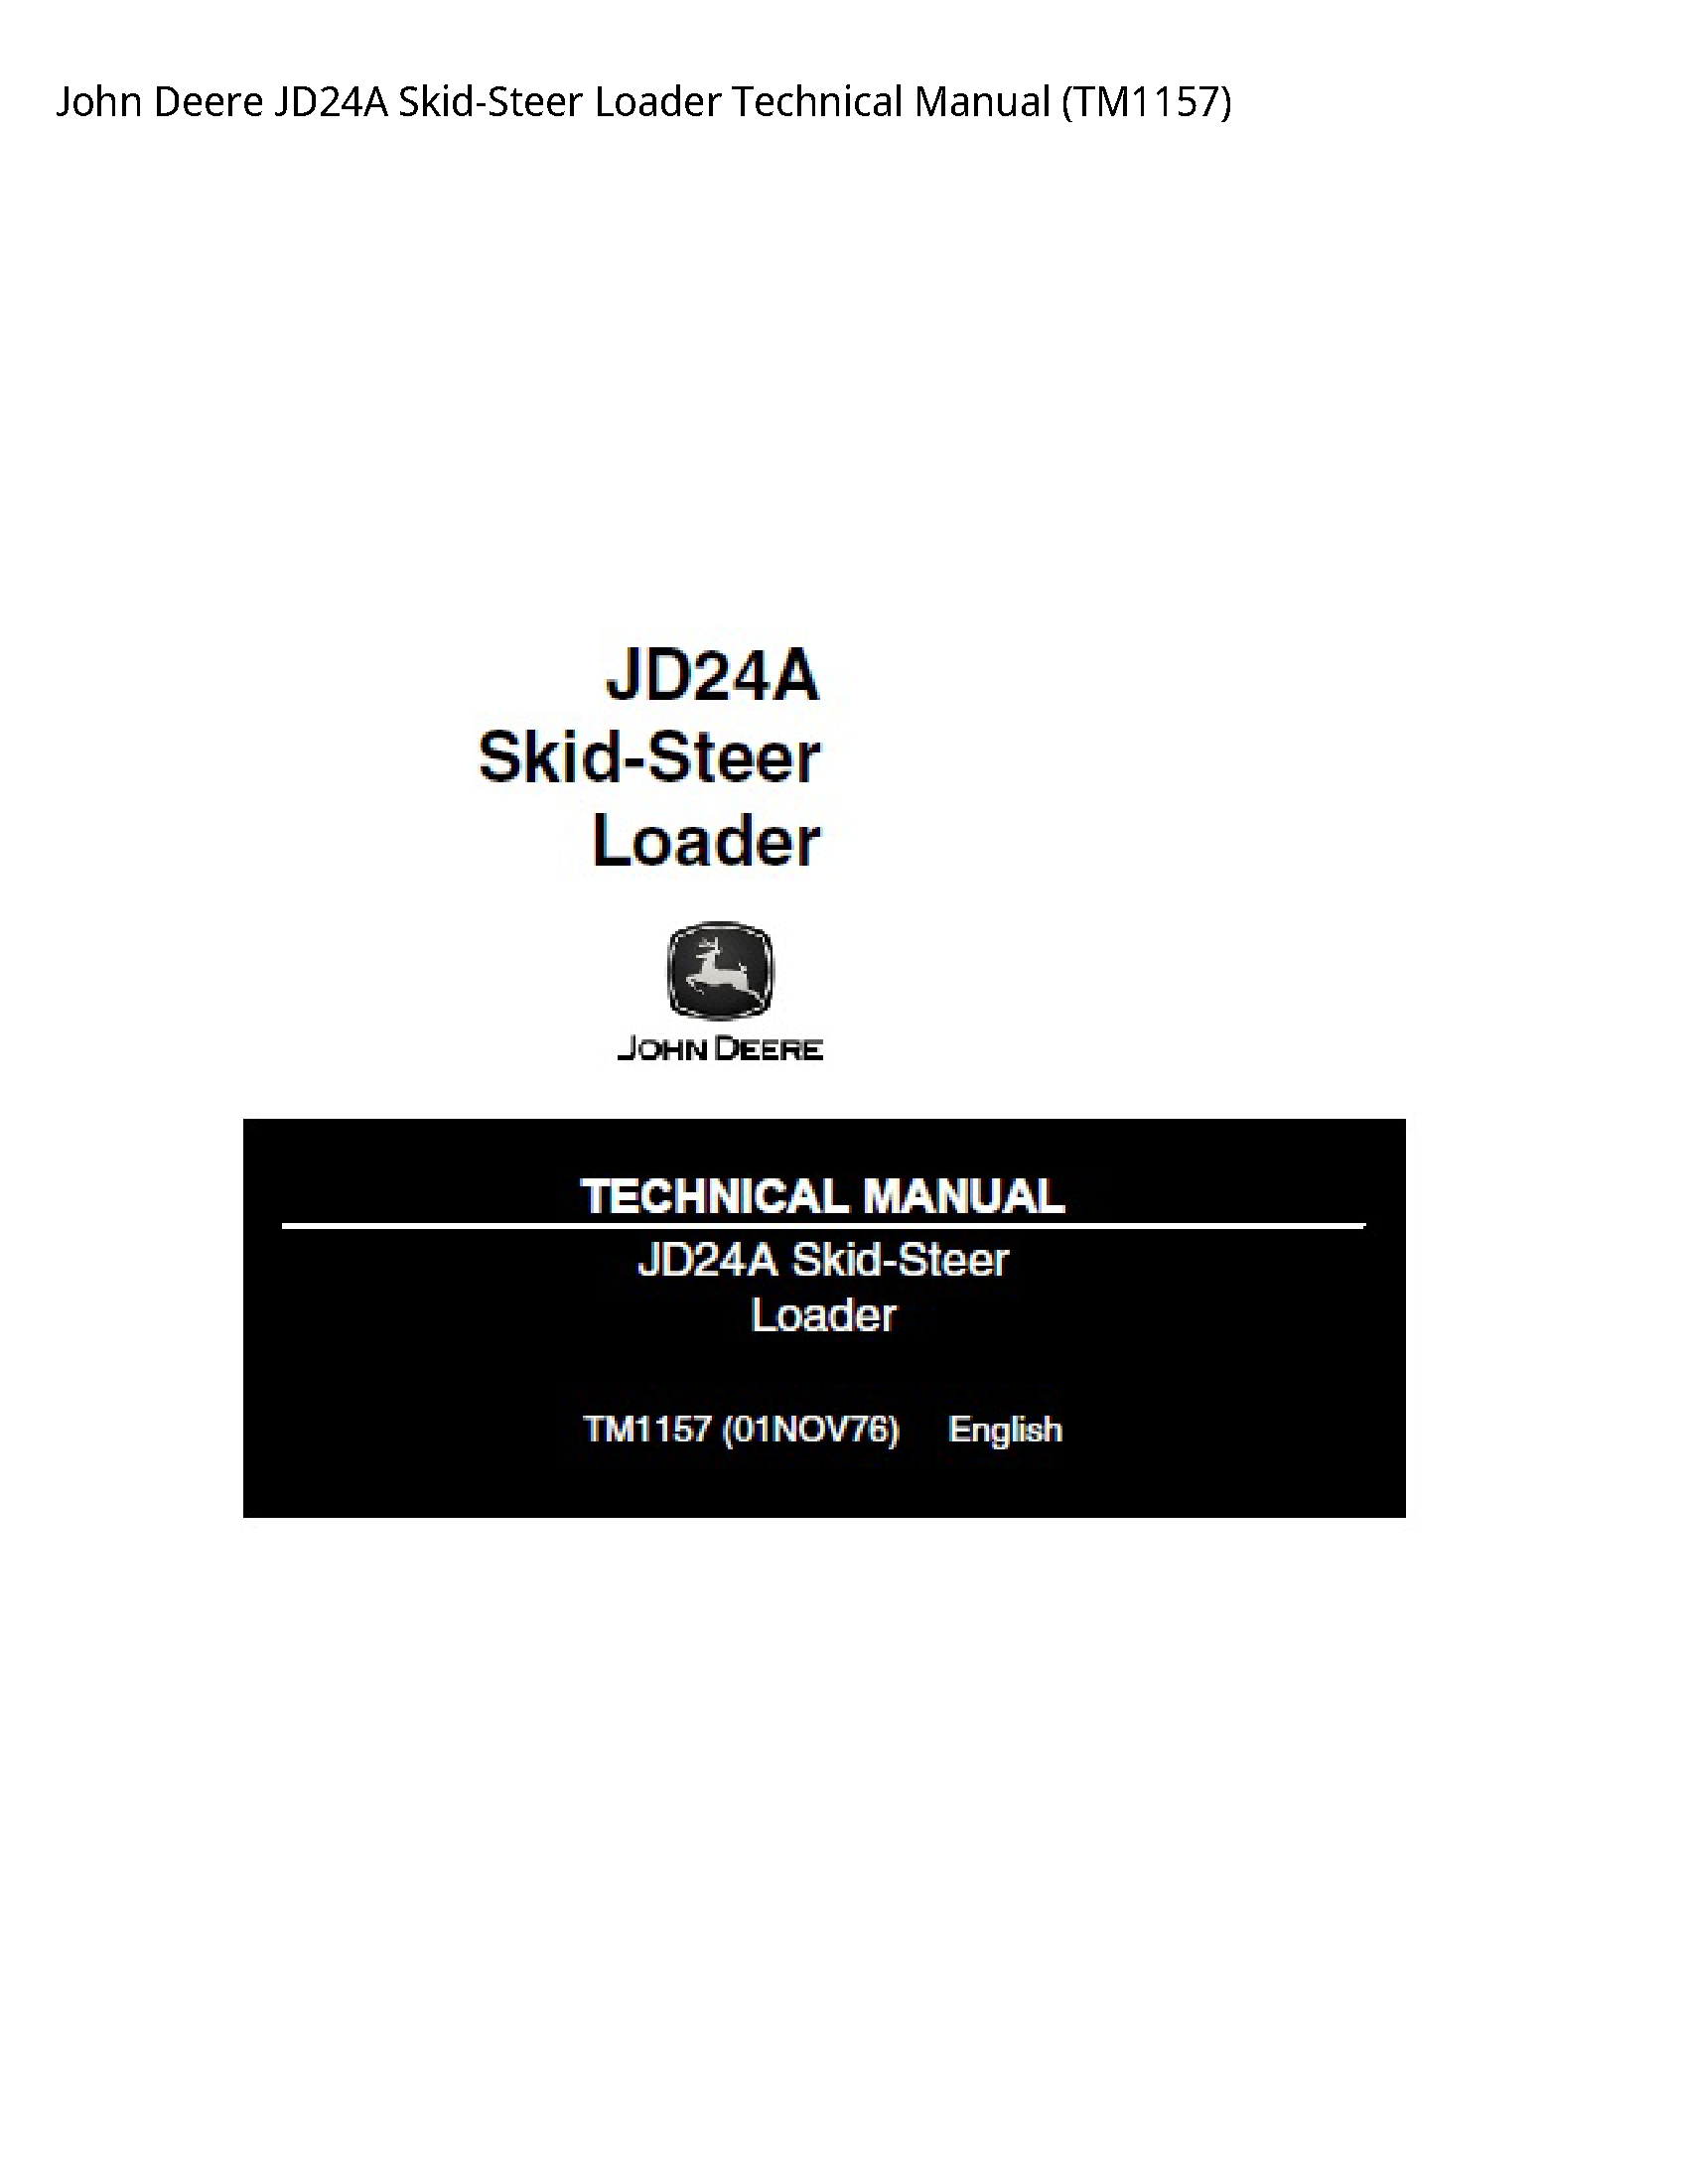 John Deere JD24A Skid-Steer Loader Technical manual